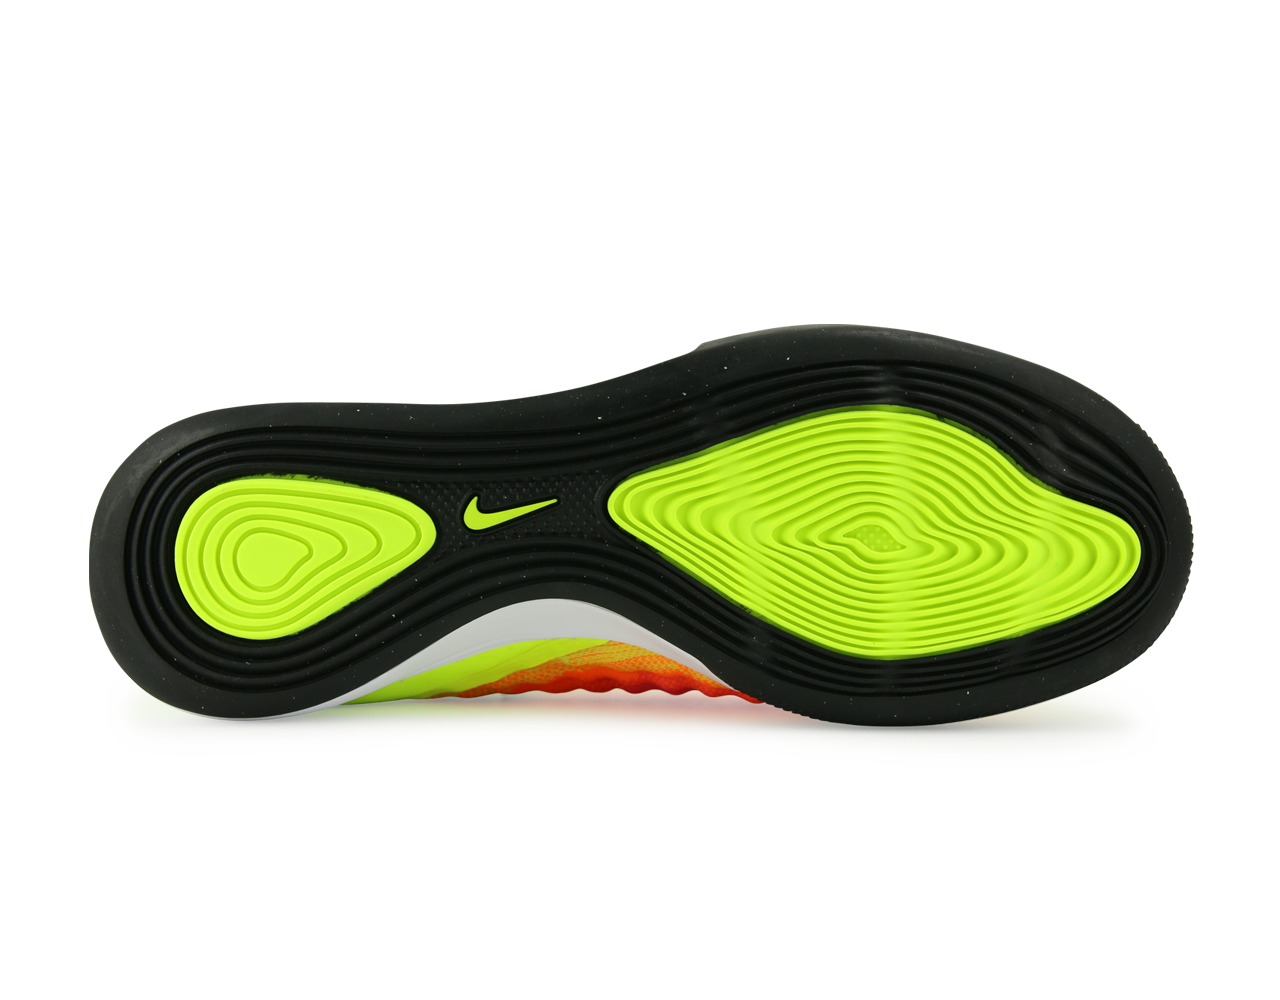 Nike Men's MagistaX Proximo II Indoor Soccer Shoes Volt/Black/Hyper/Turquoise